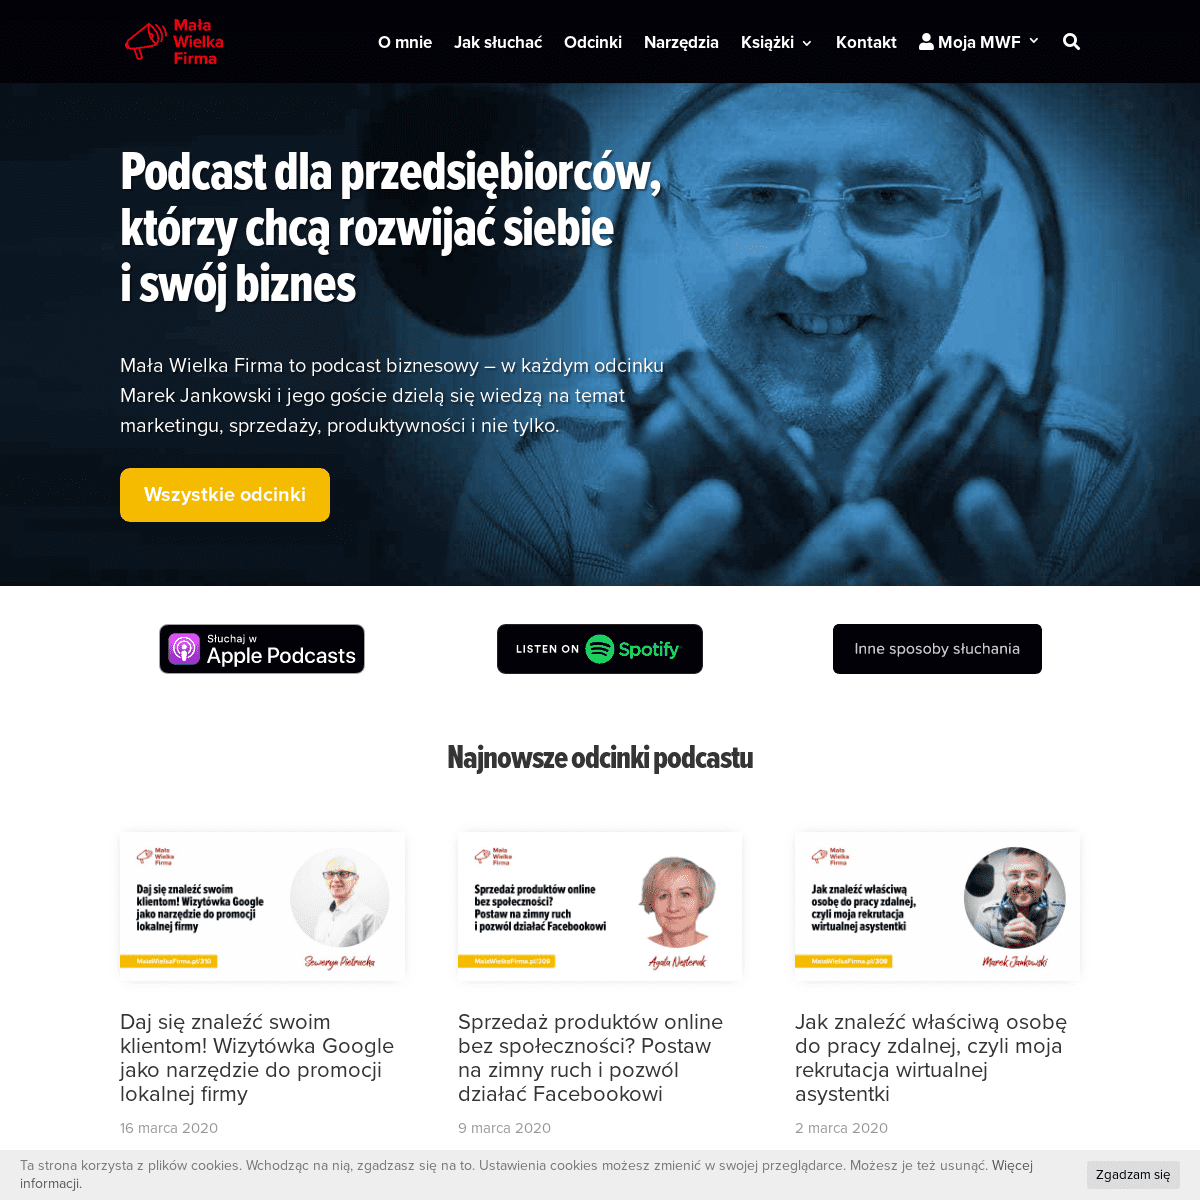 A complete backup of malawielkafirma.pl